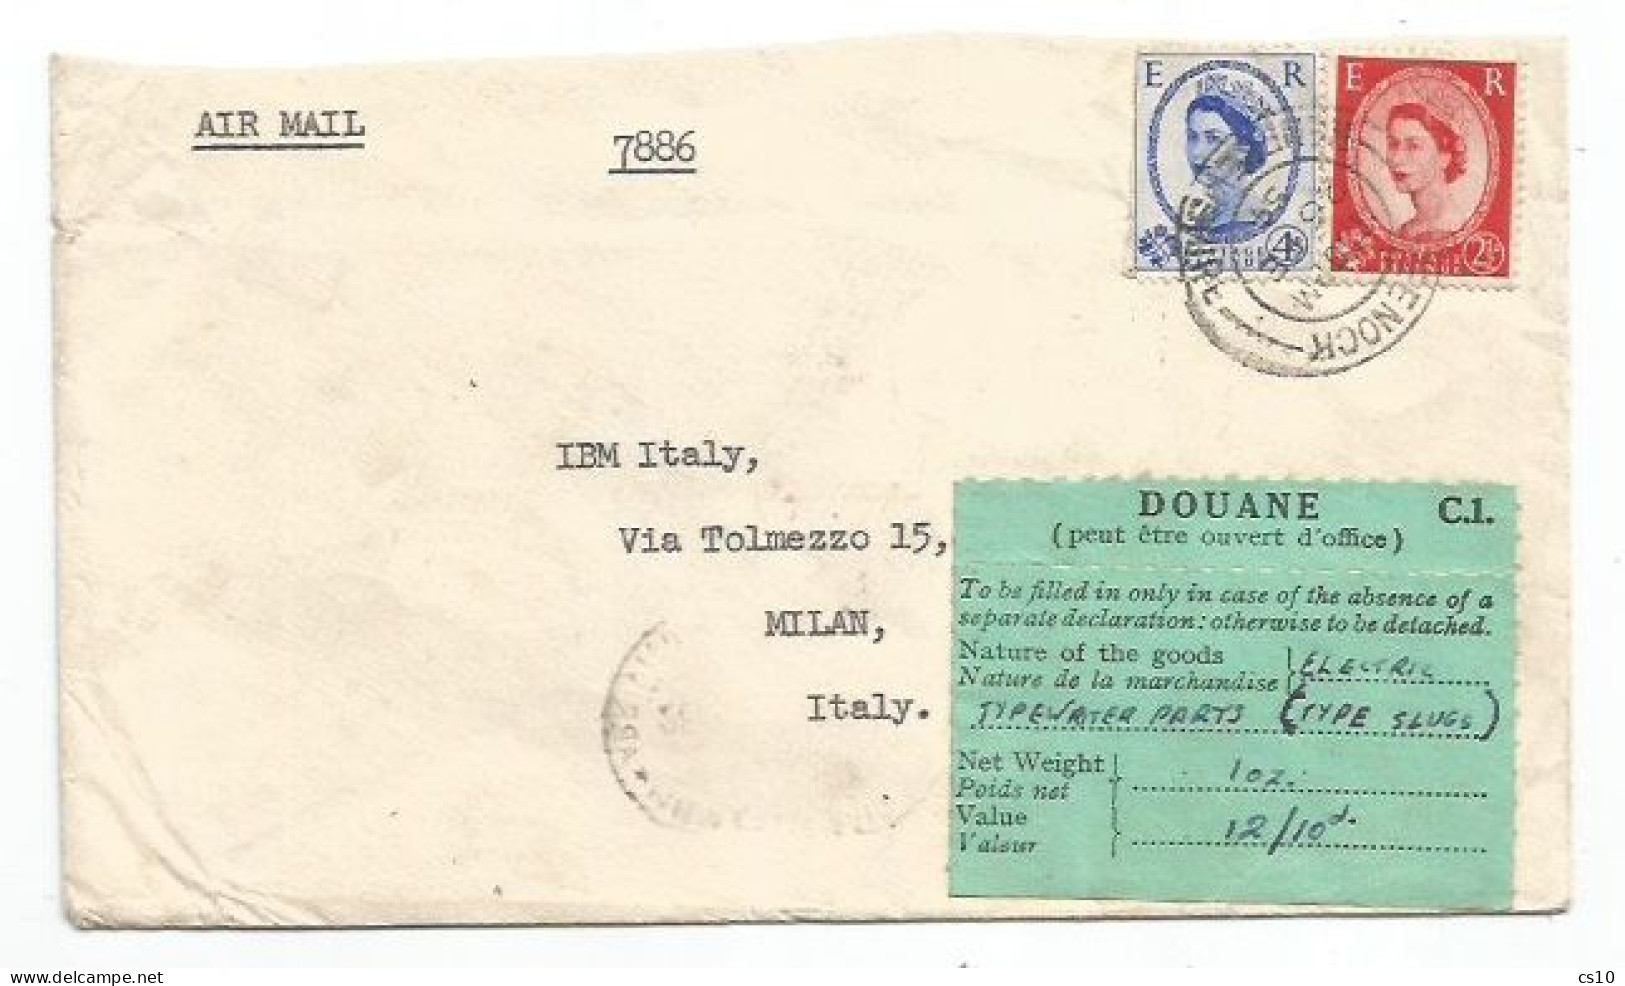 UK Britain Douane Customs Zoll Dogana Label C1 X Typewriter Parts Airmail CV UK 1954 To Italy C/o IBM Corporation - Storia Postale